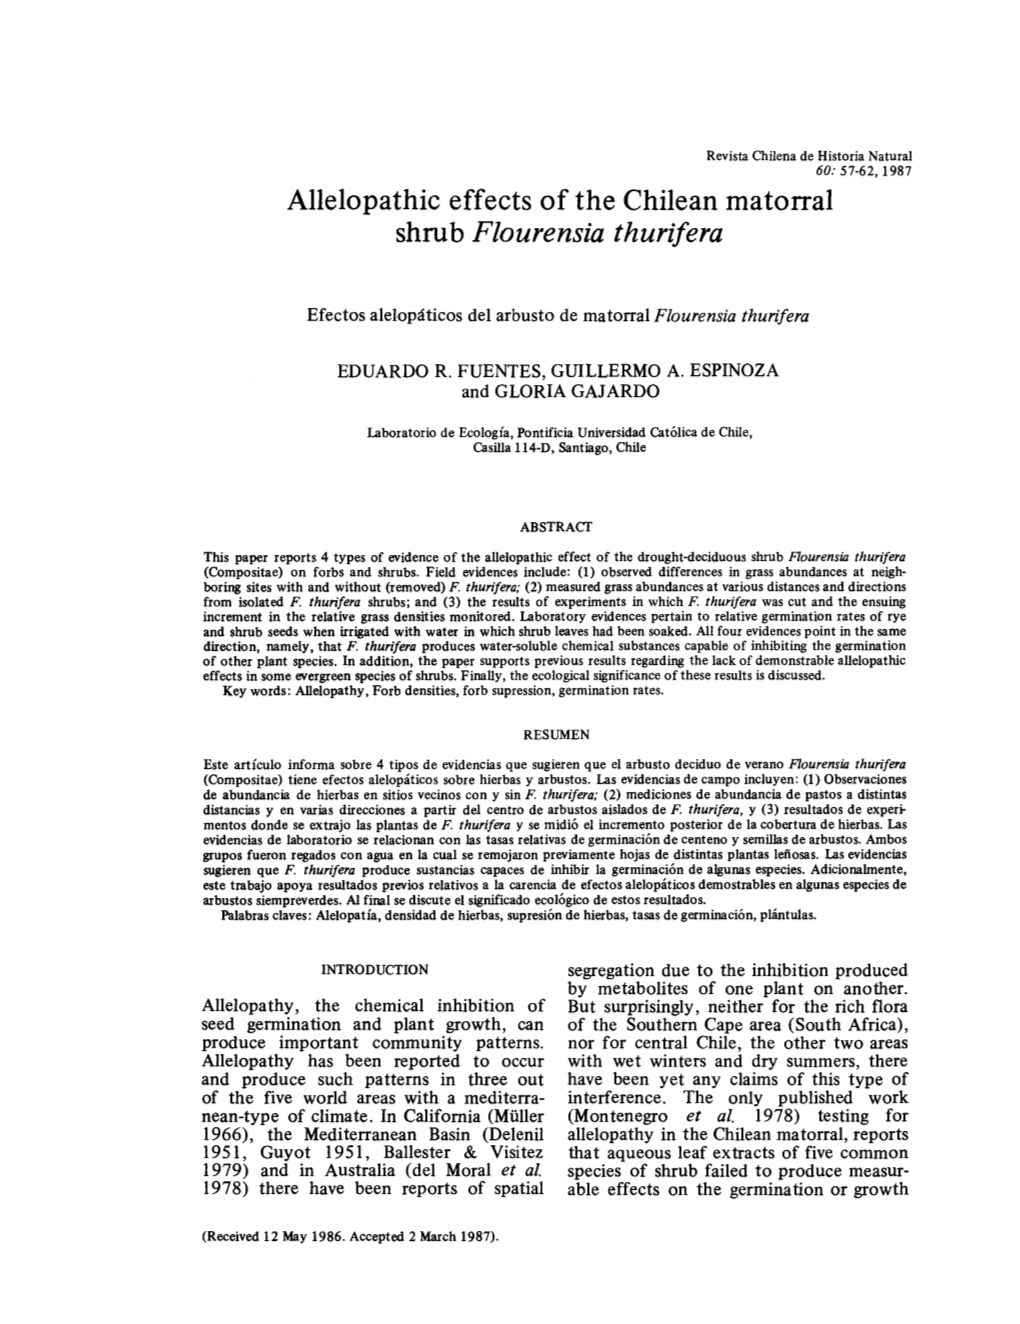 Allelopathic Effects of the Chilean Matorral Shrub Flourensia Thurifera